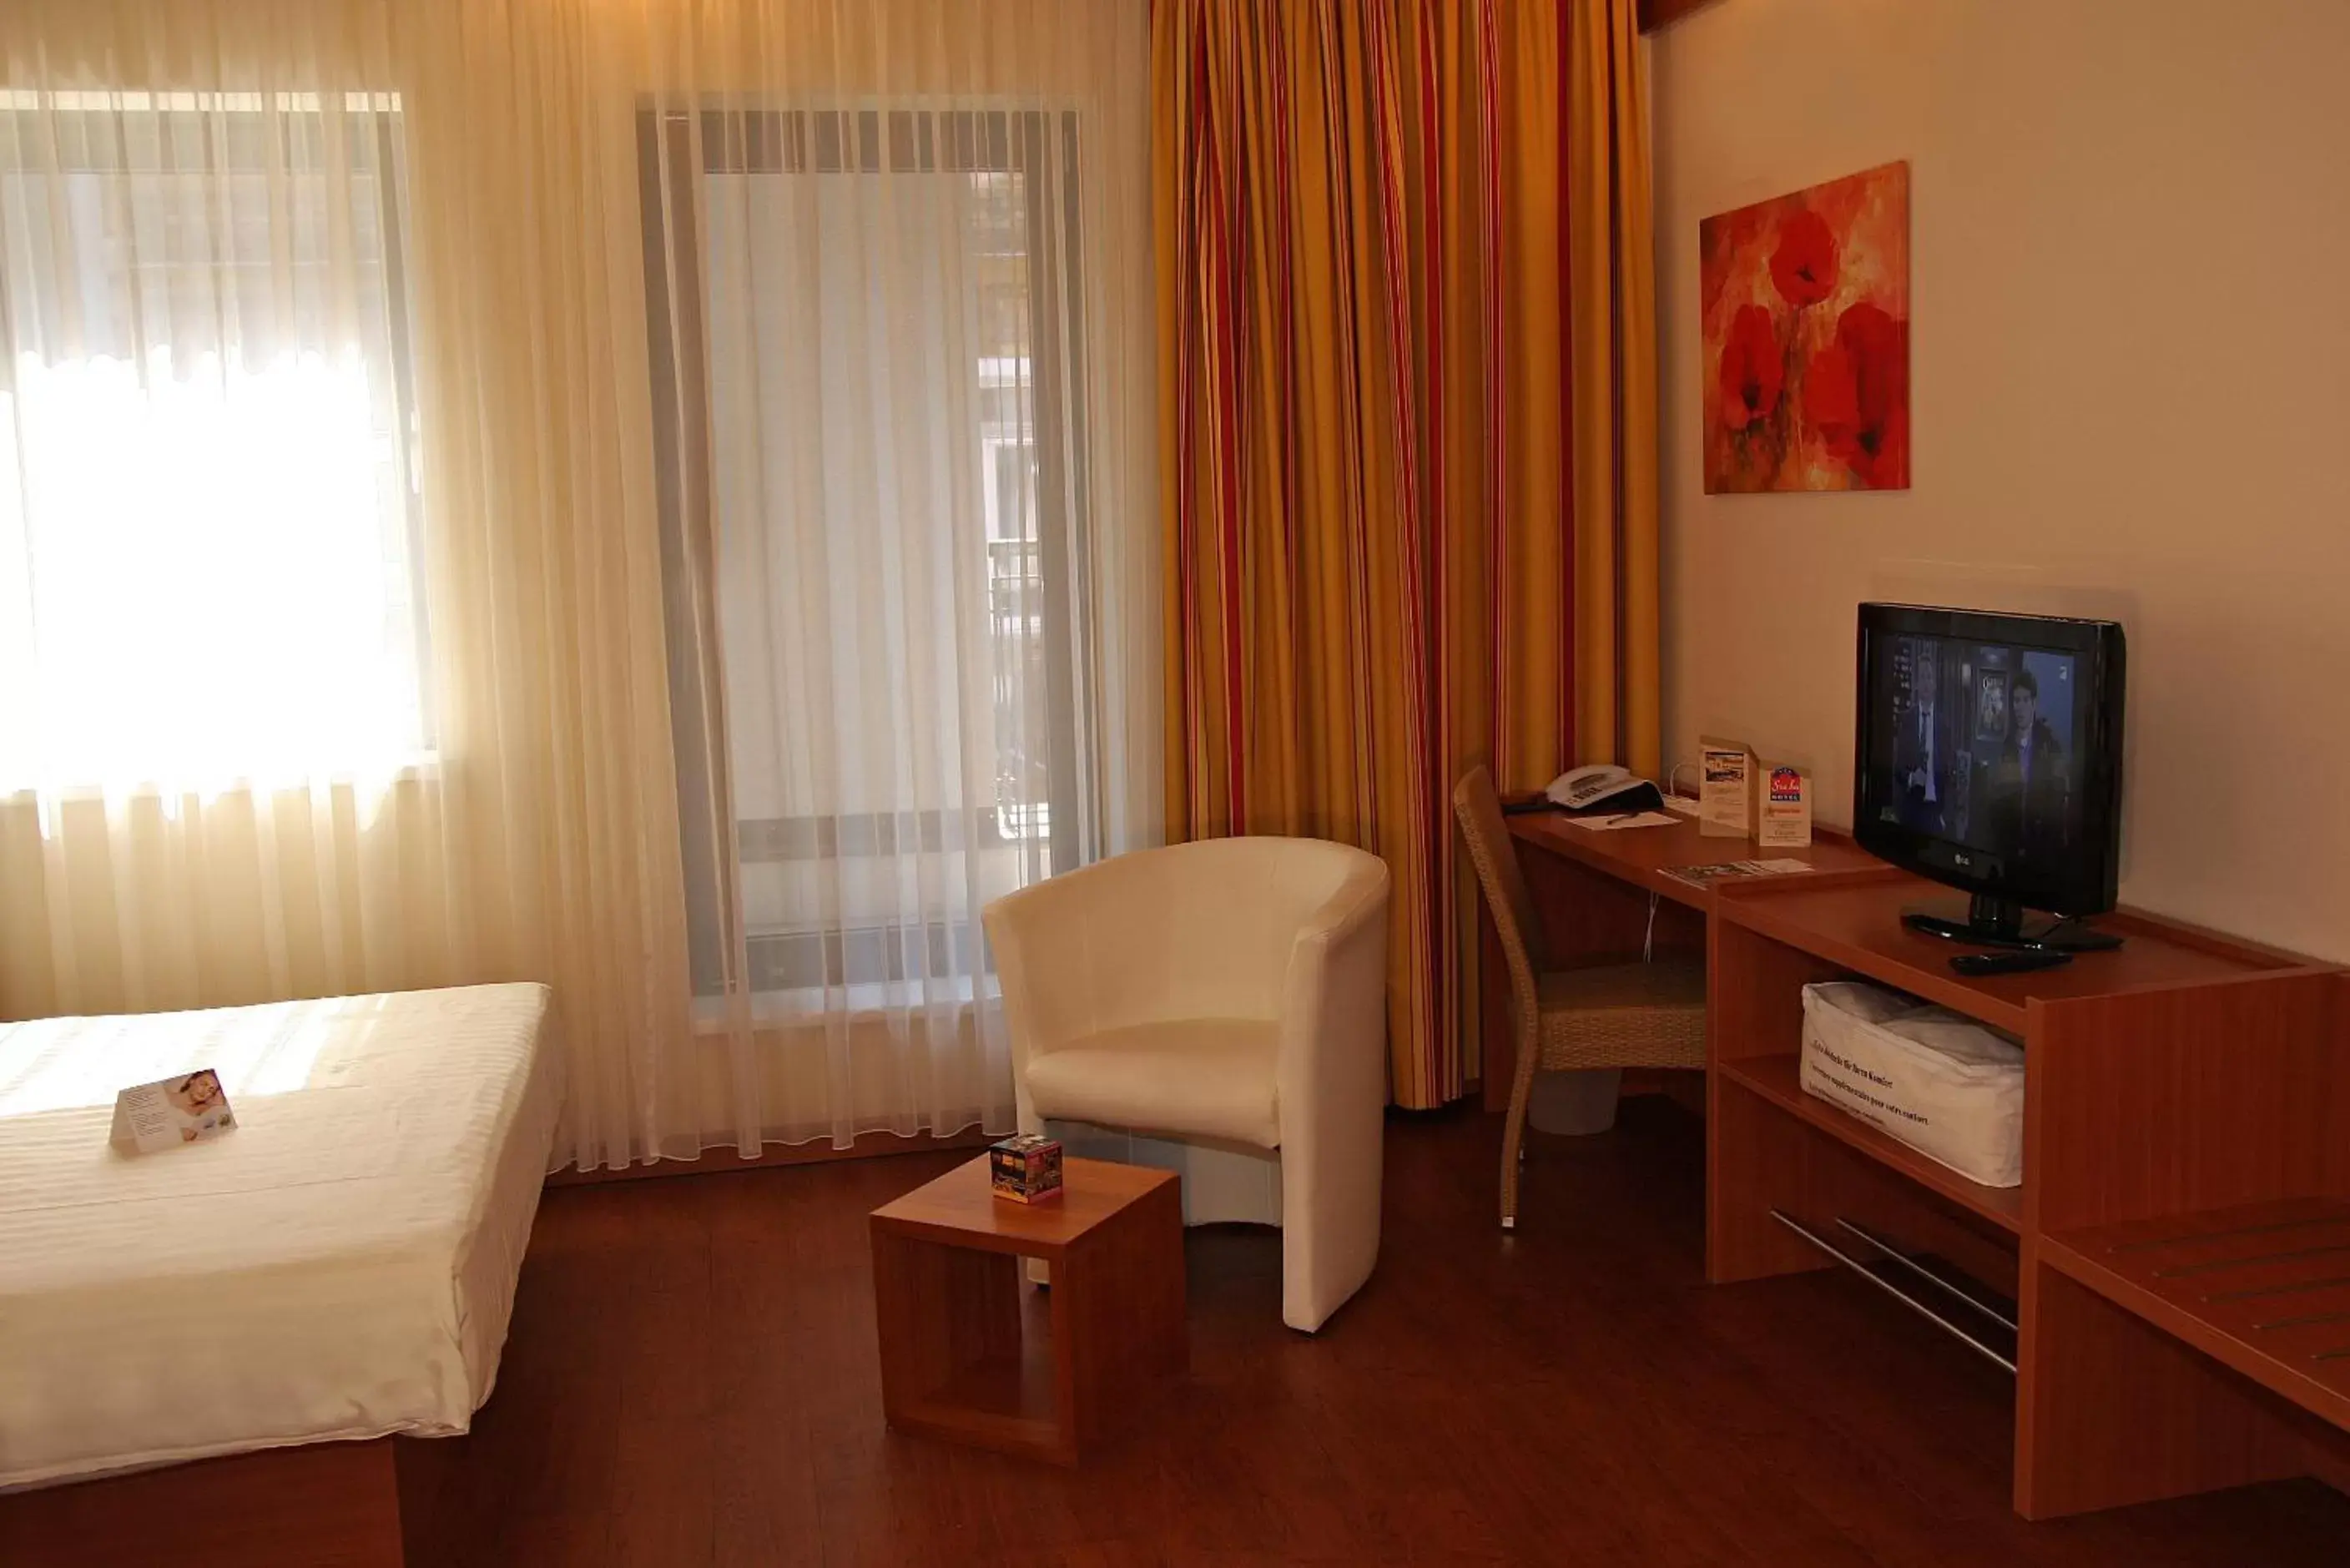 Bedroom, TV/Entertainment Center in City Hotel Budapest